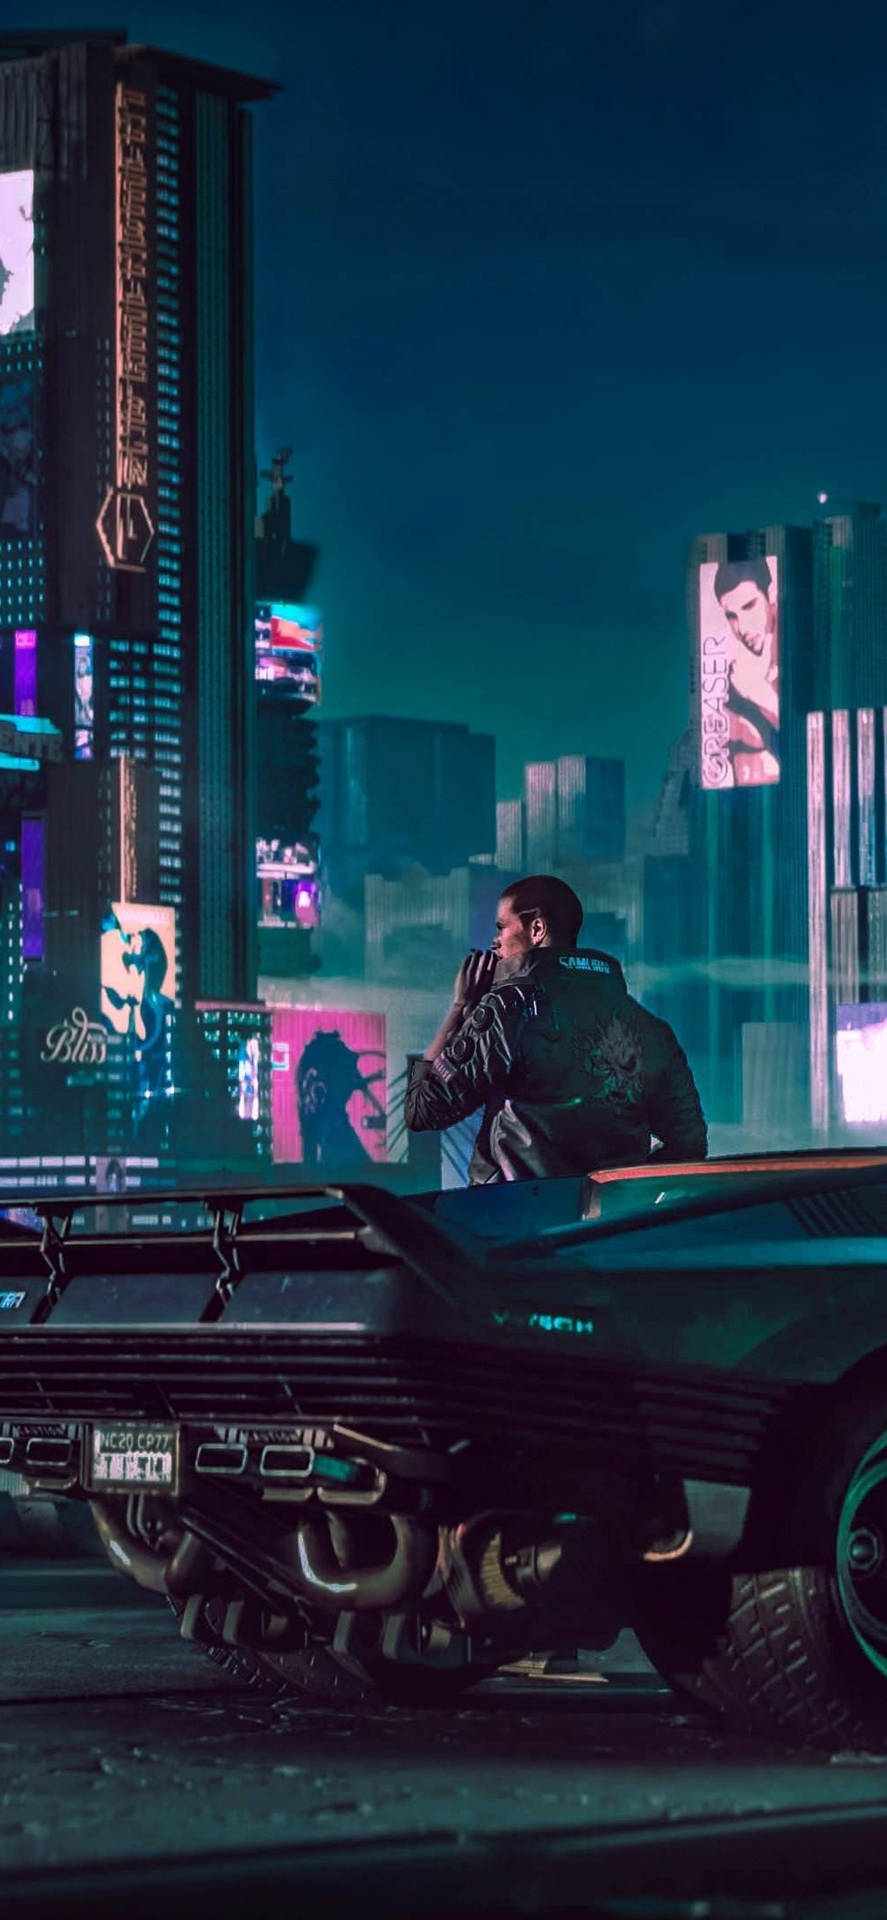 Man With Car Cyberpunk Iphone X